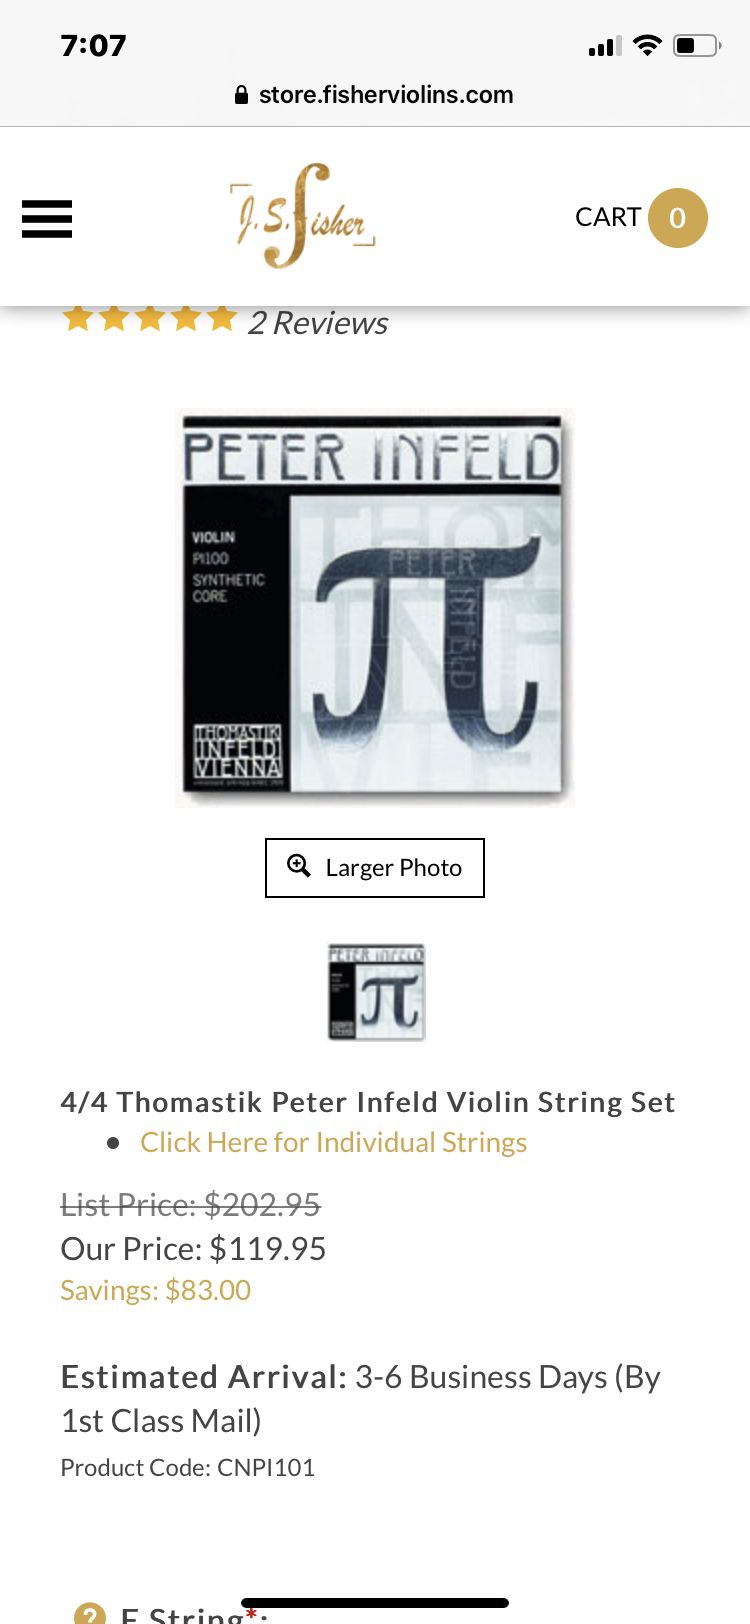 Peter infeld violin strings